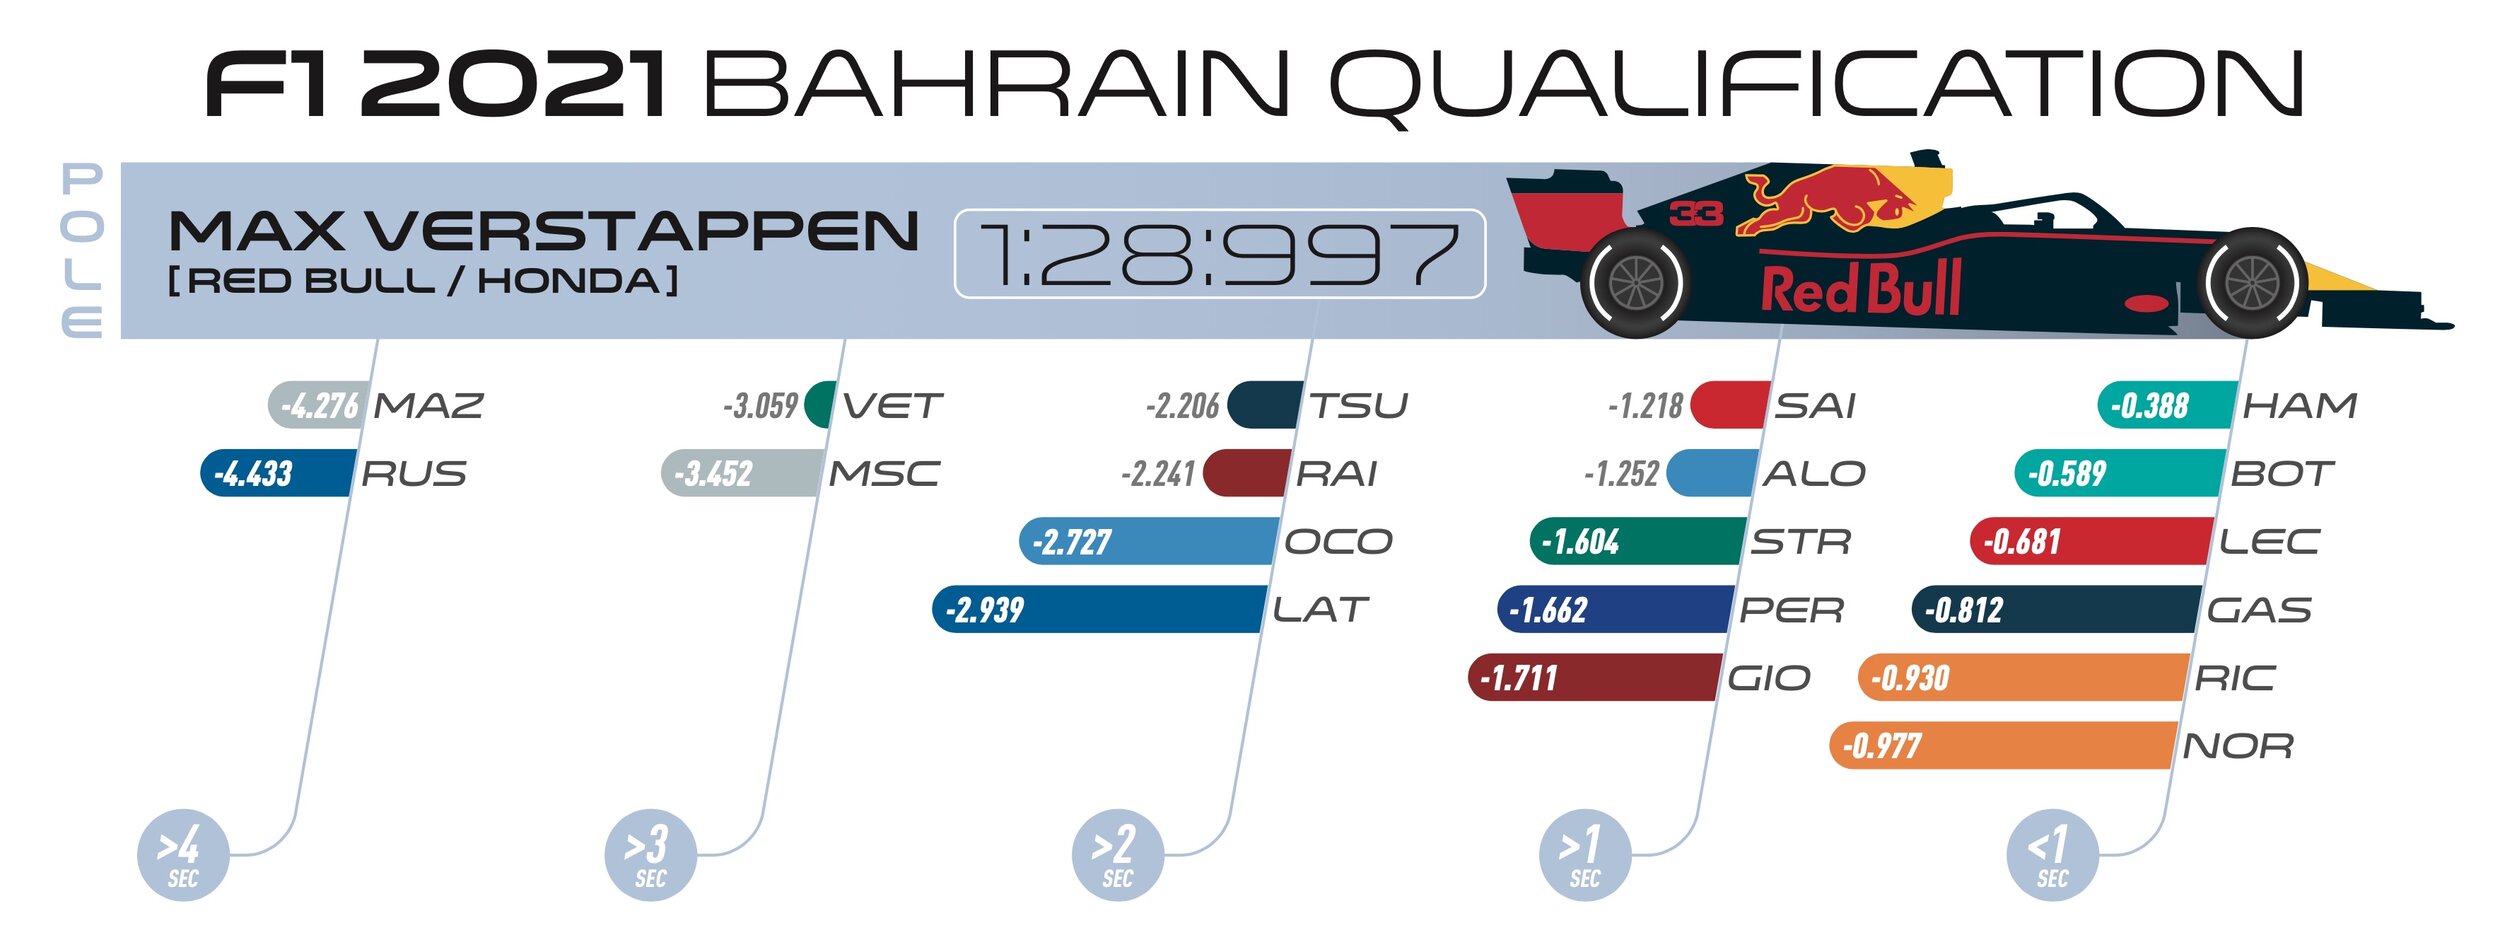 2021 Bahrain GP qualification